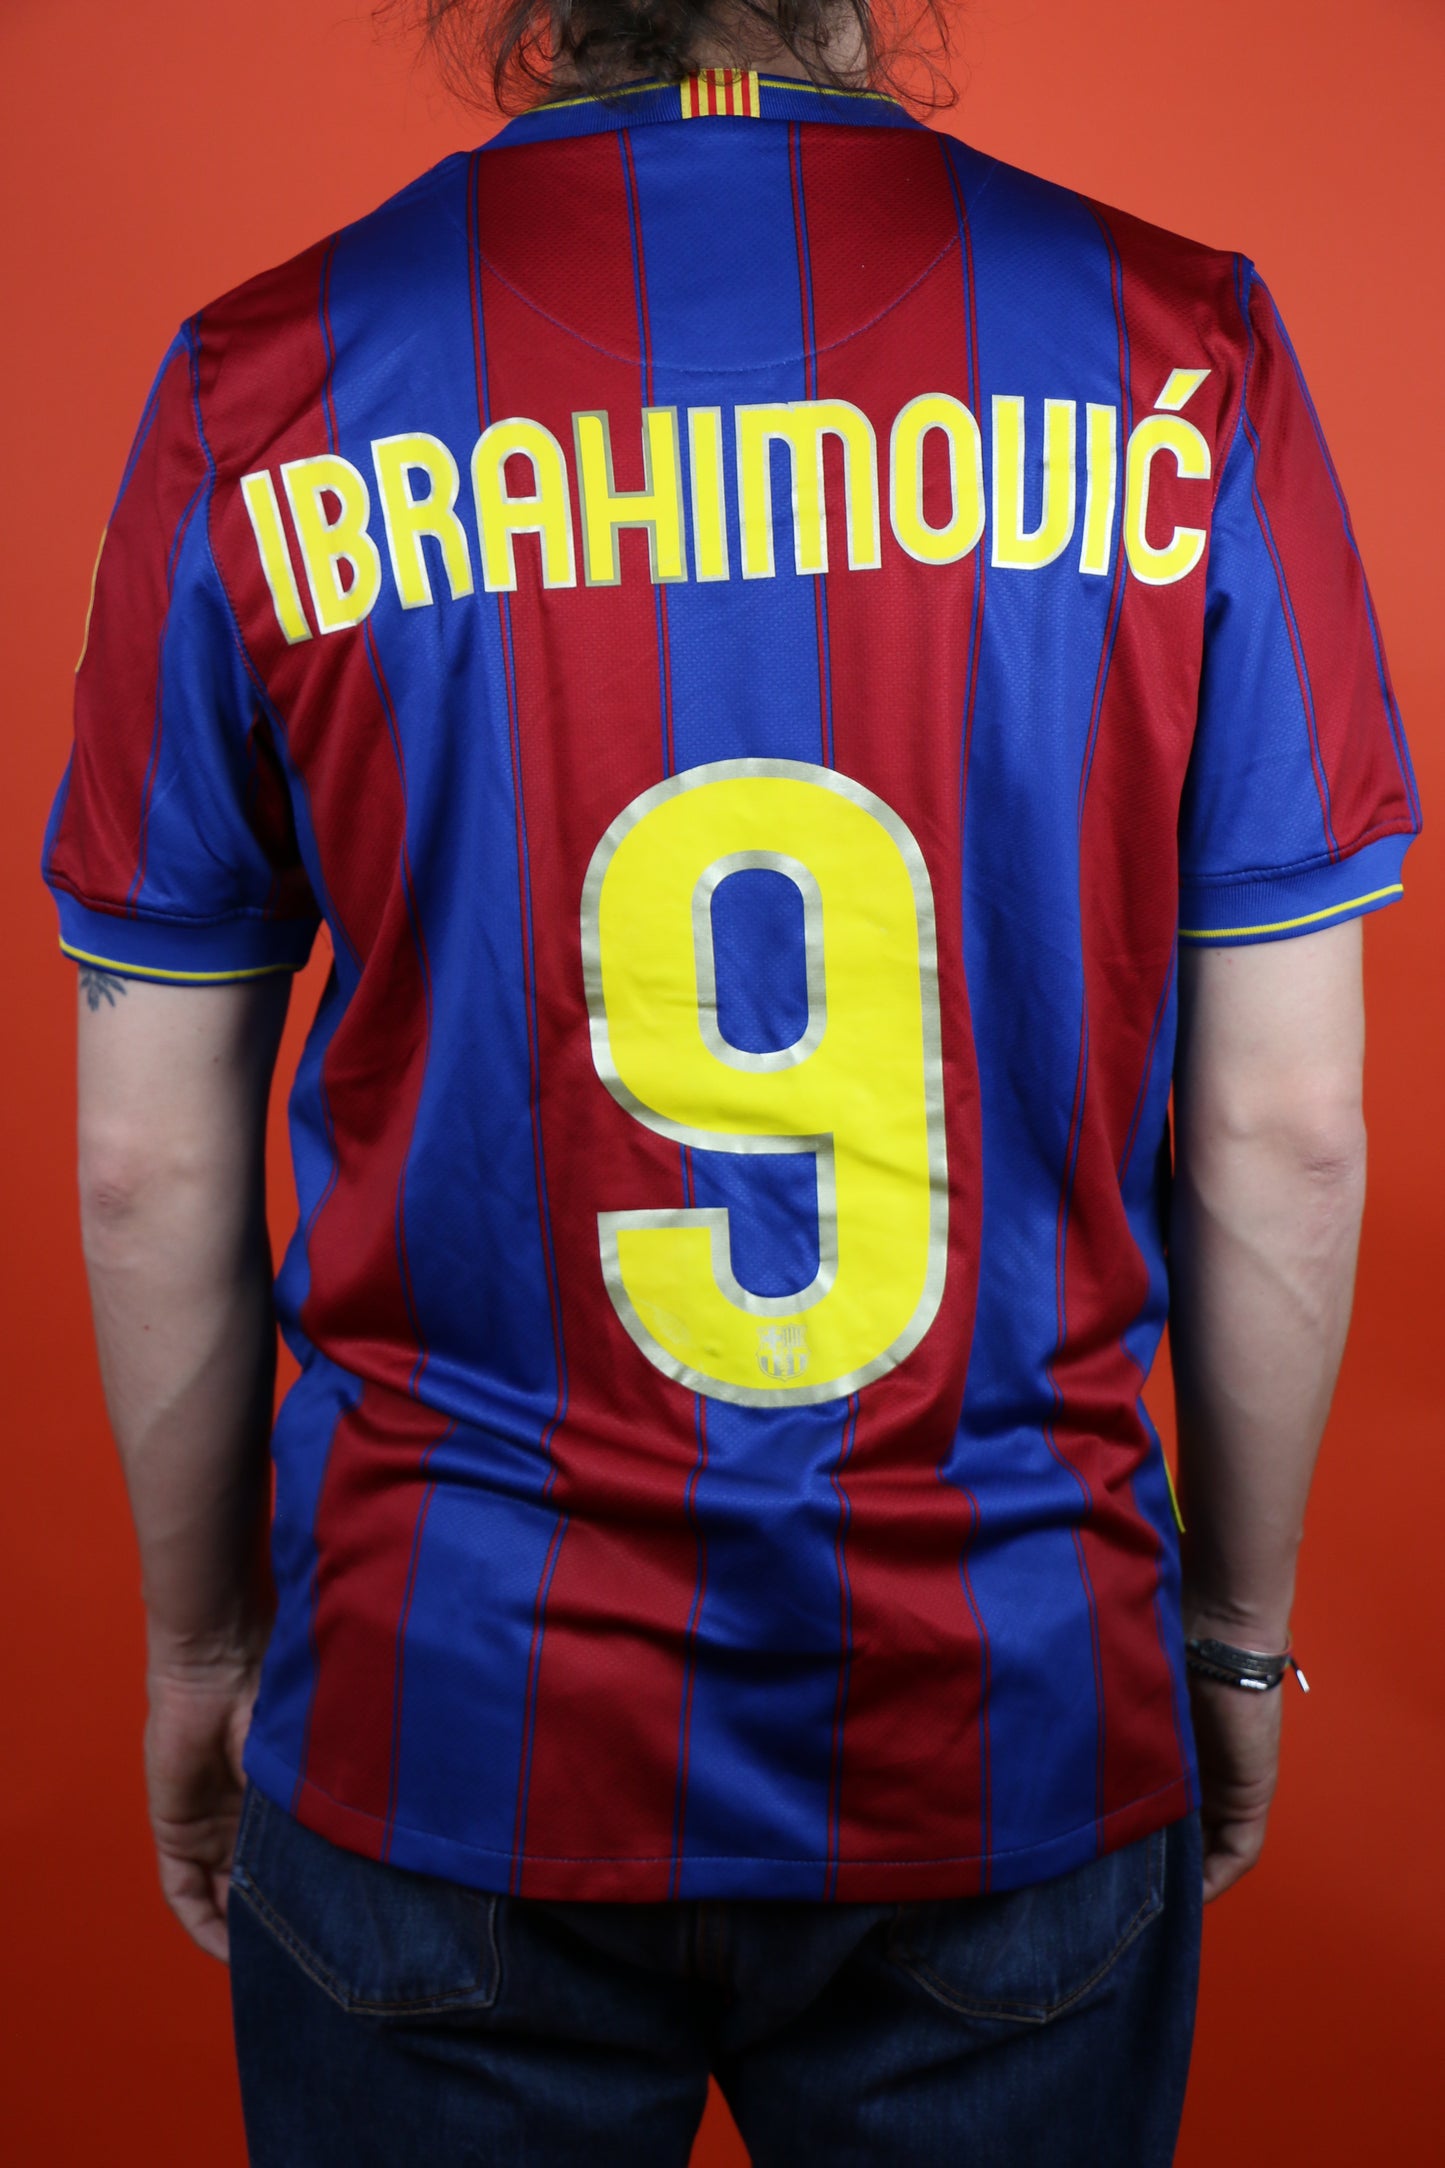 Barcelona Jersey Ibrahimovic 2009 - vintage clothing clochard92.com